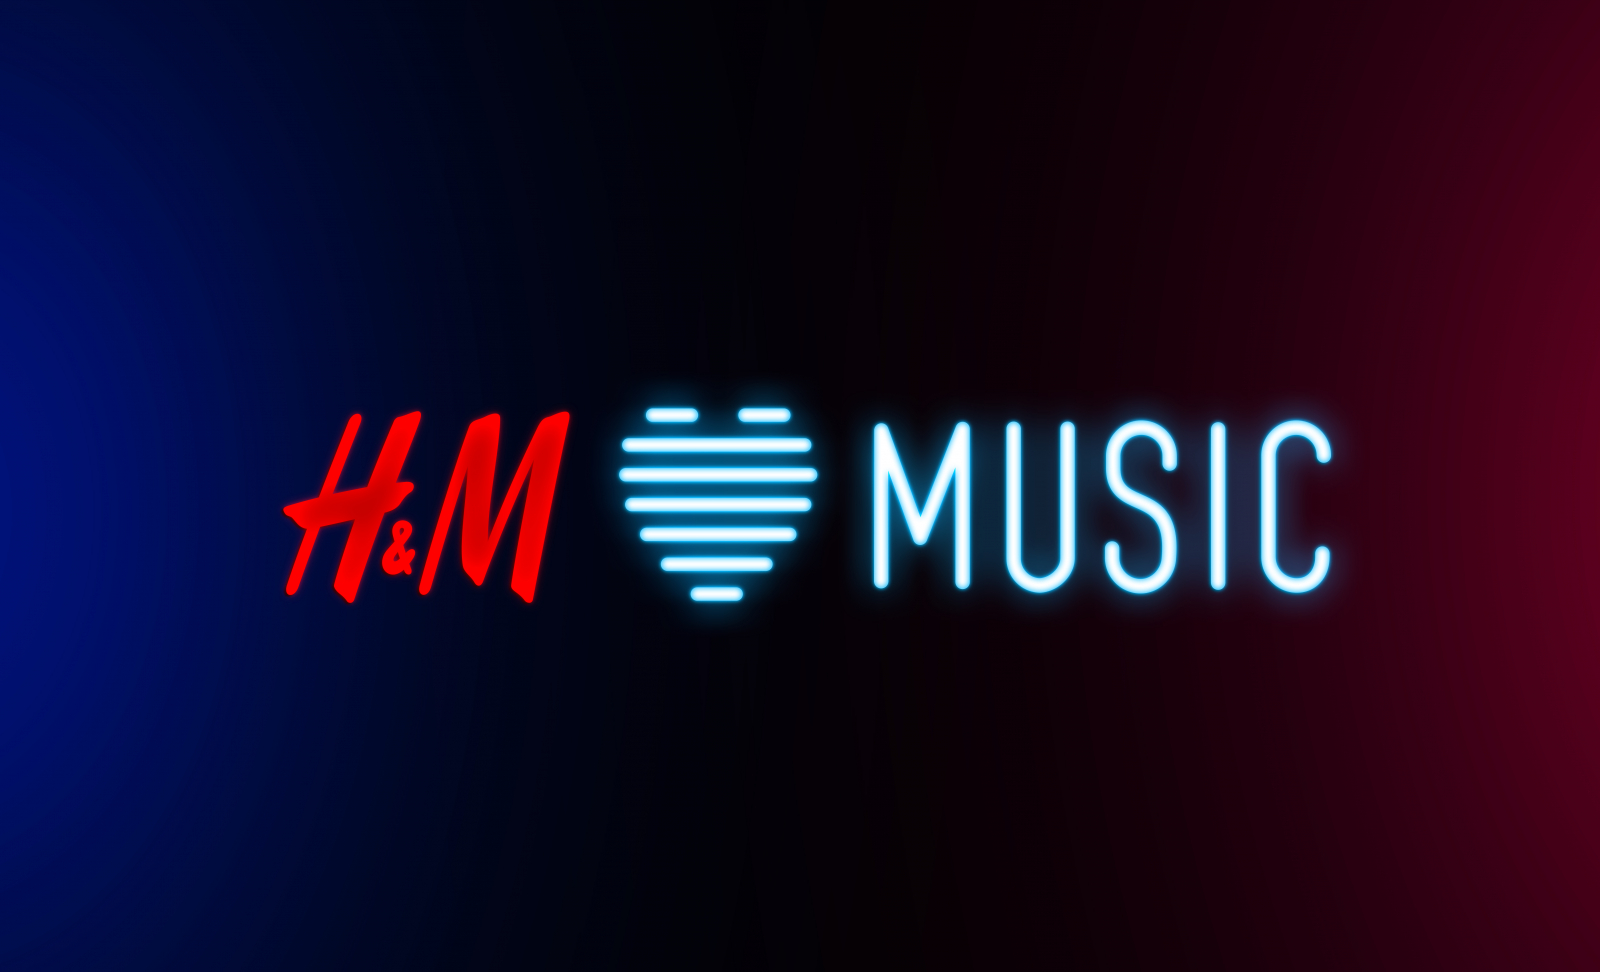 Festiwal H&M <3 Music (Fot. Materiały prasowe